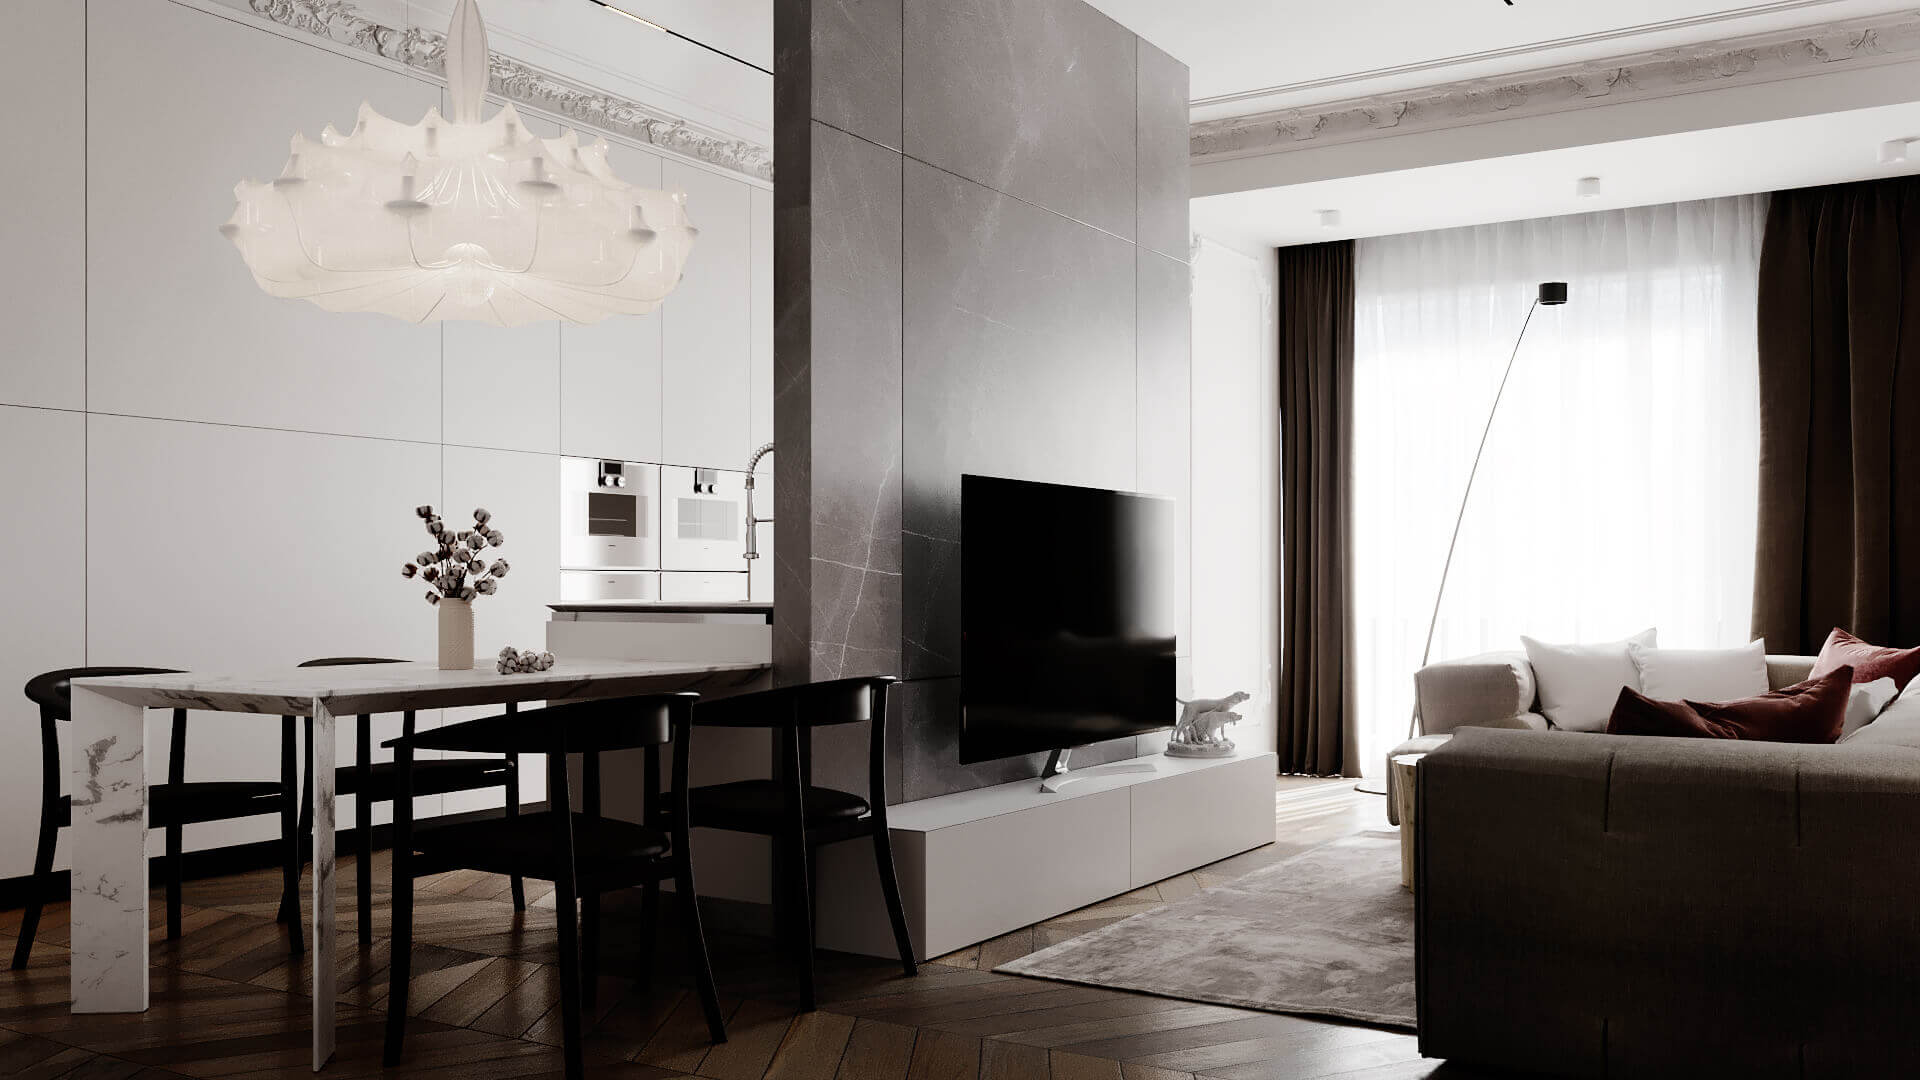 Bernardazzi Apartment living room dining room tv wall - cgi visualization